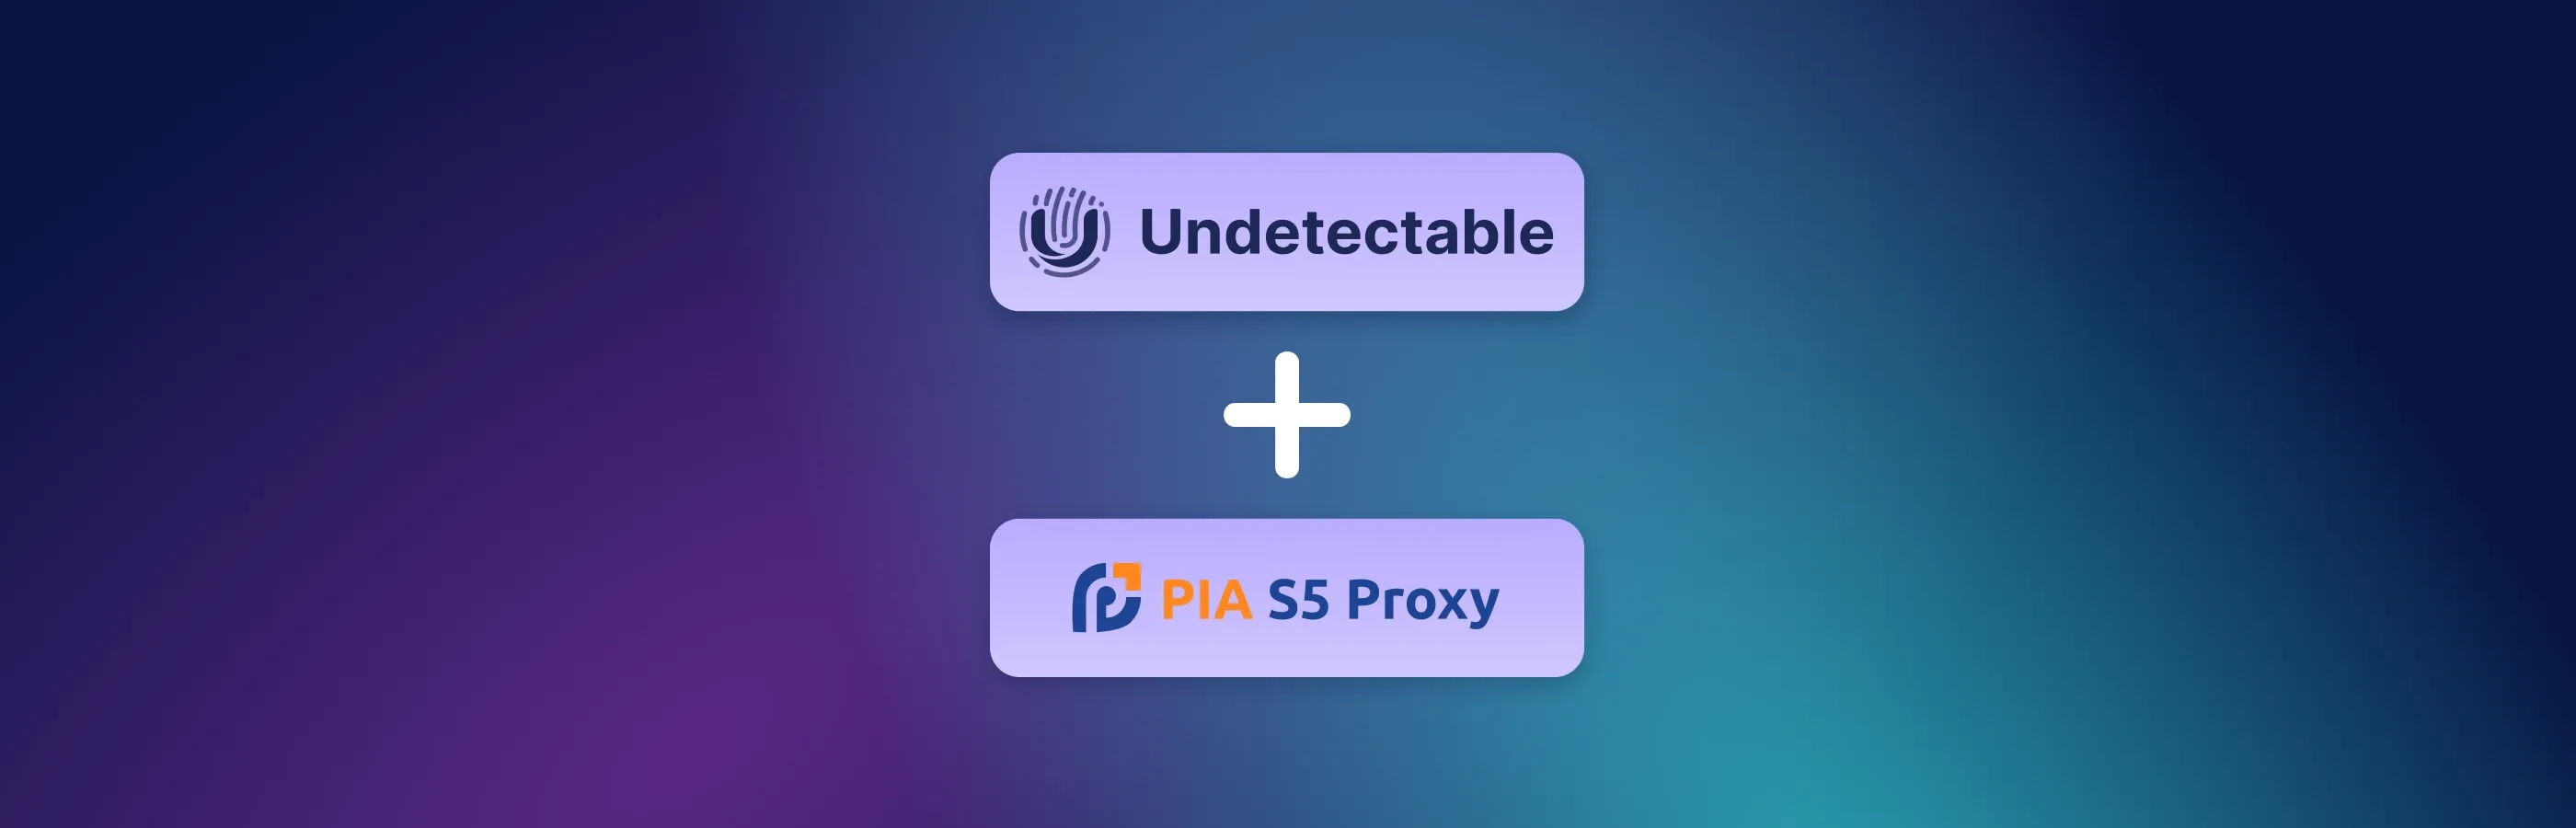 Подключение PIA S5 Proxy к антидетект-браузеру Undetectable: шаги и инструкция